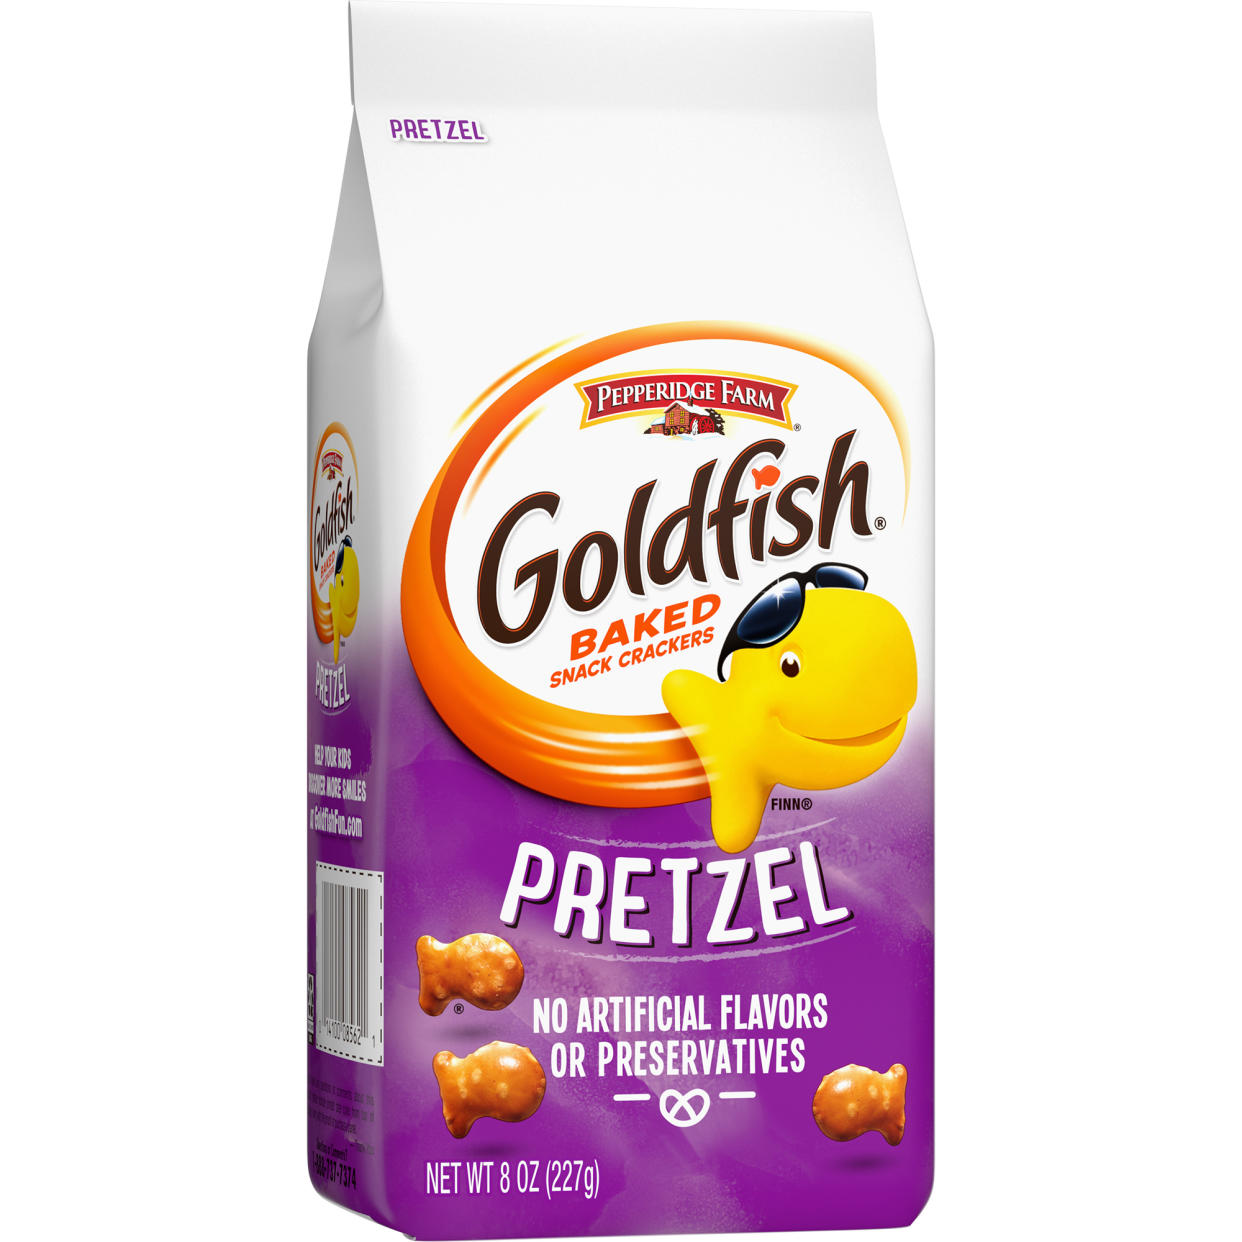 Pretzel Goldfish taste like any other crunch pretzel — ho-hum. (Campbell's)